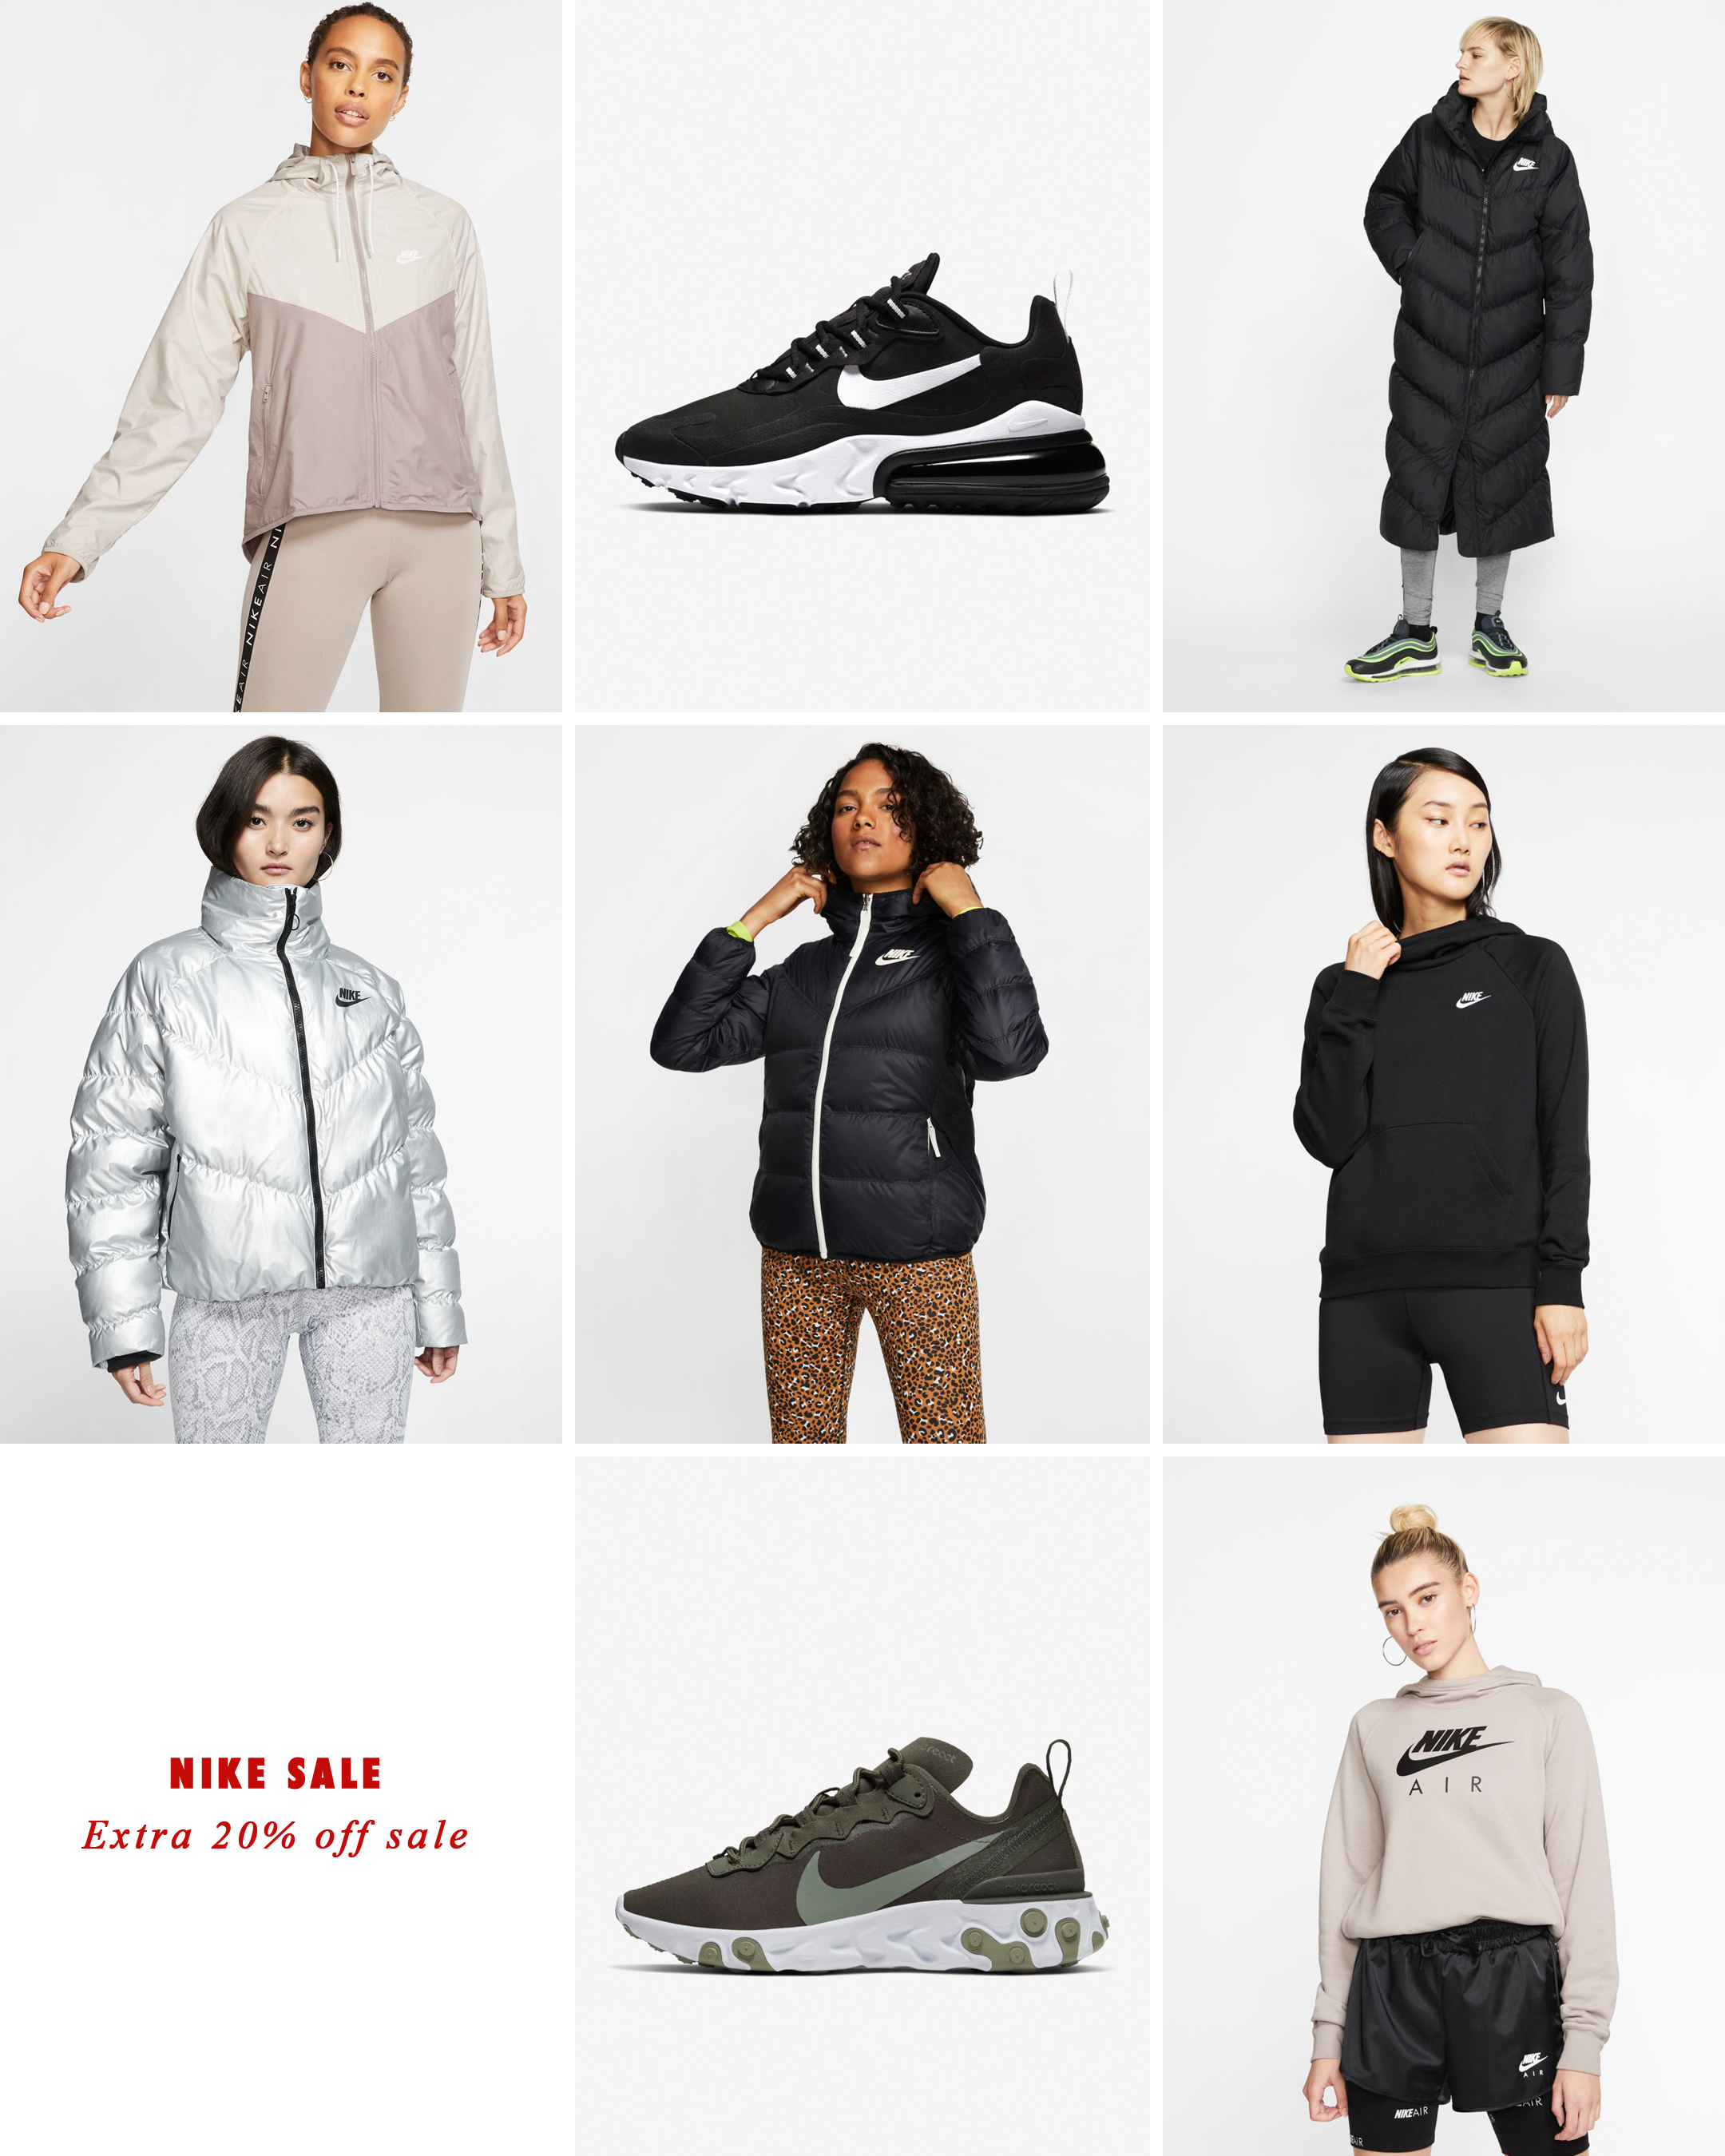 Nike sale